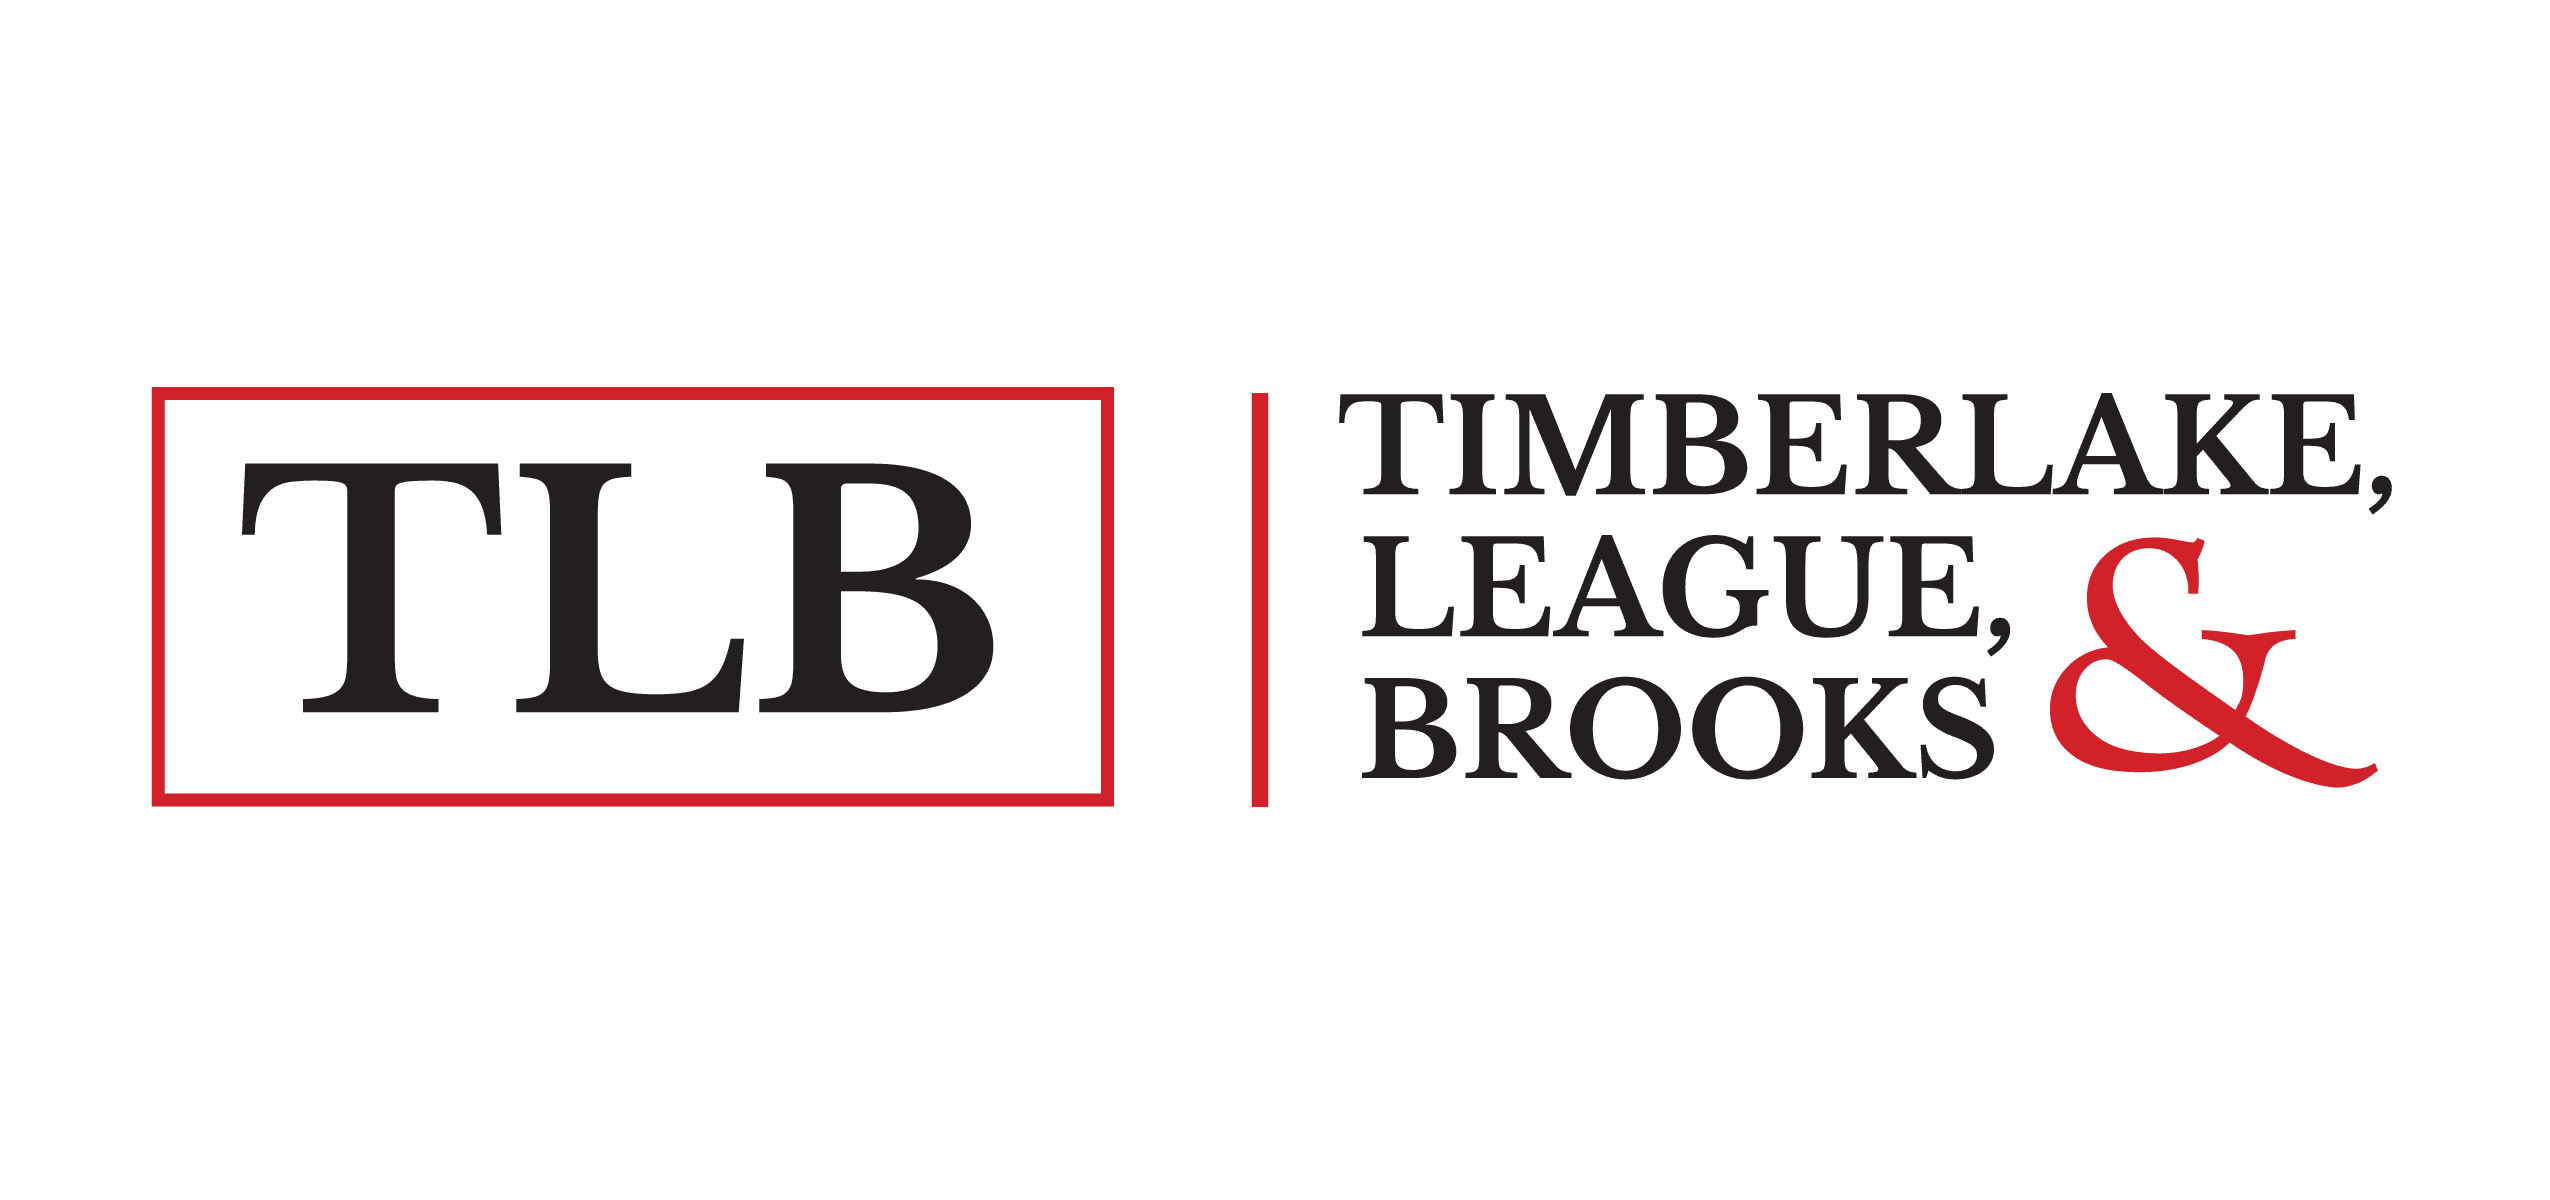 Timberlake, League, and Brooks logo